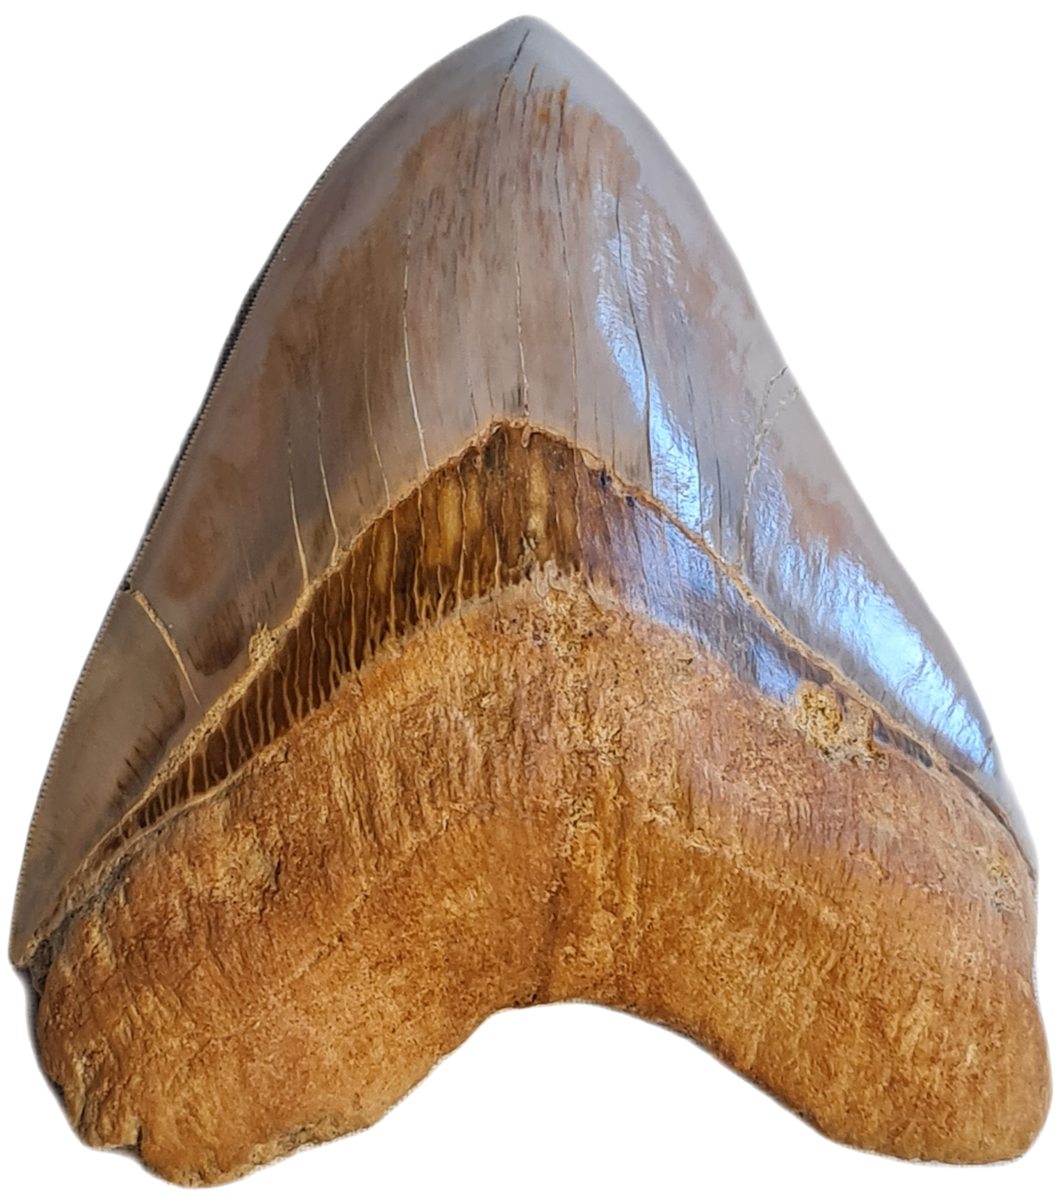 Otodus megalodon 14.1cm / 5.55 inches